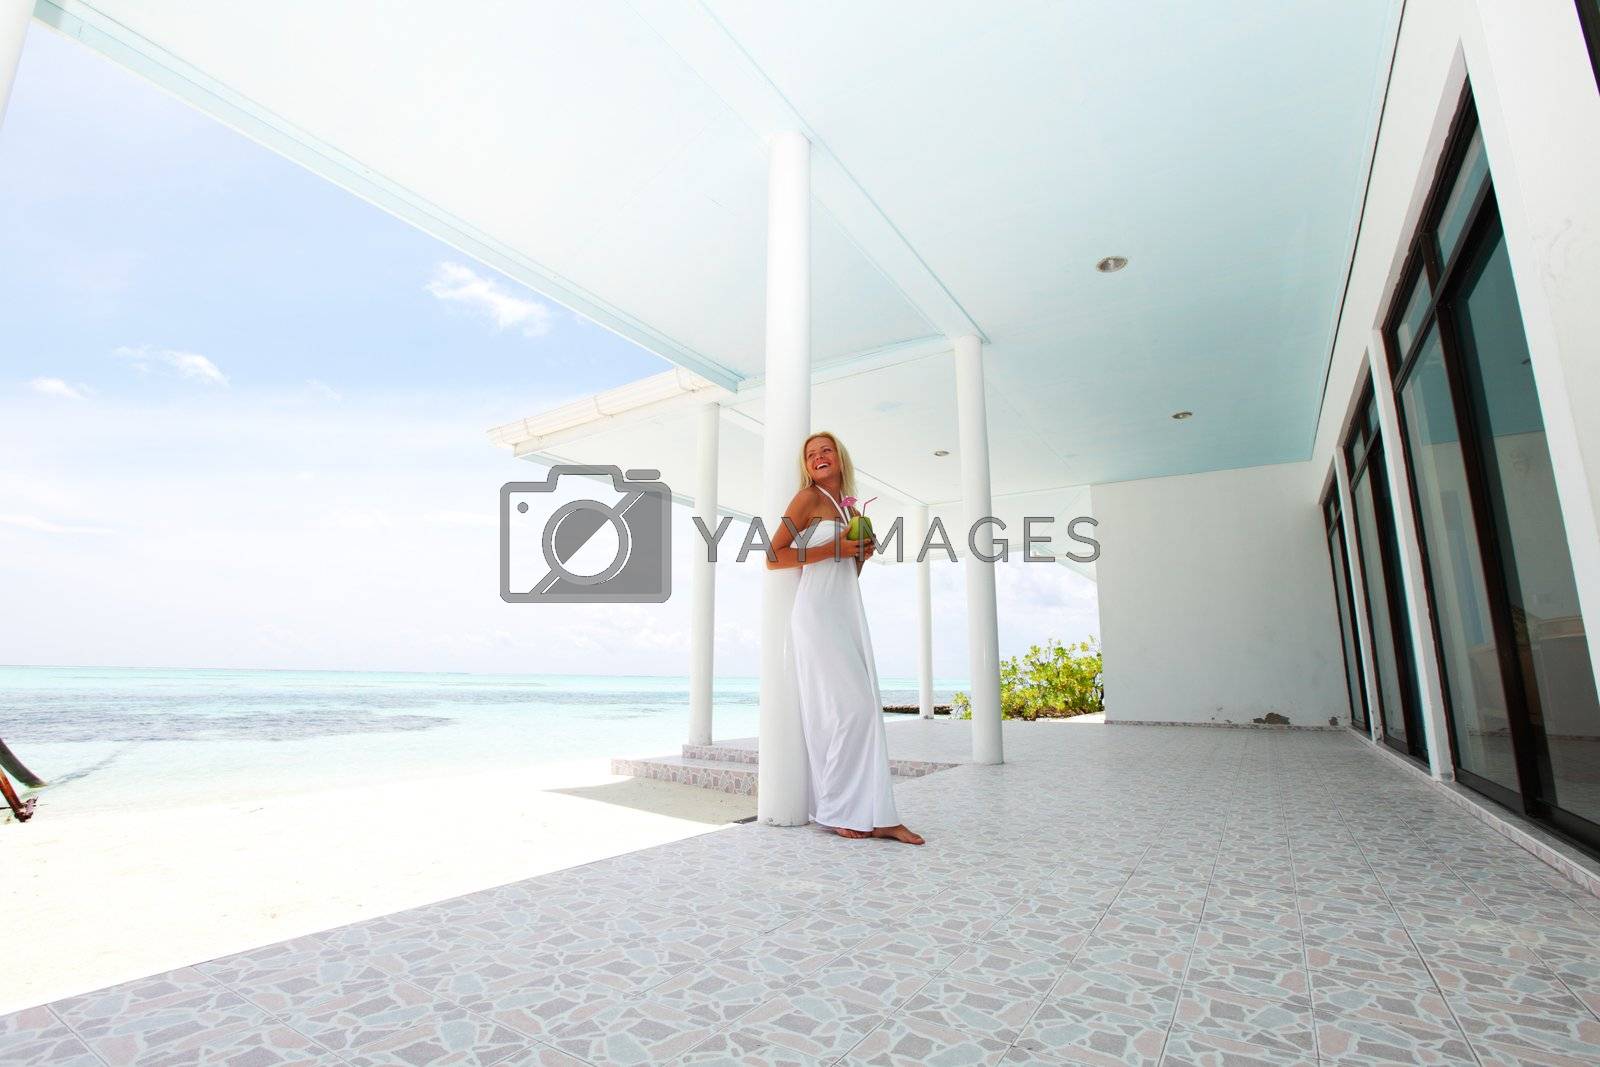 Royalty free image of tropic woman on the veranda by Yellowj